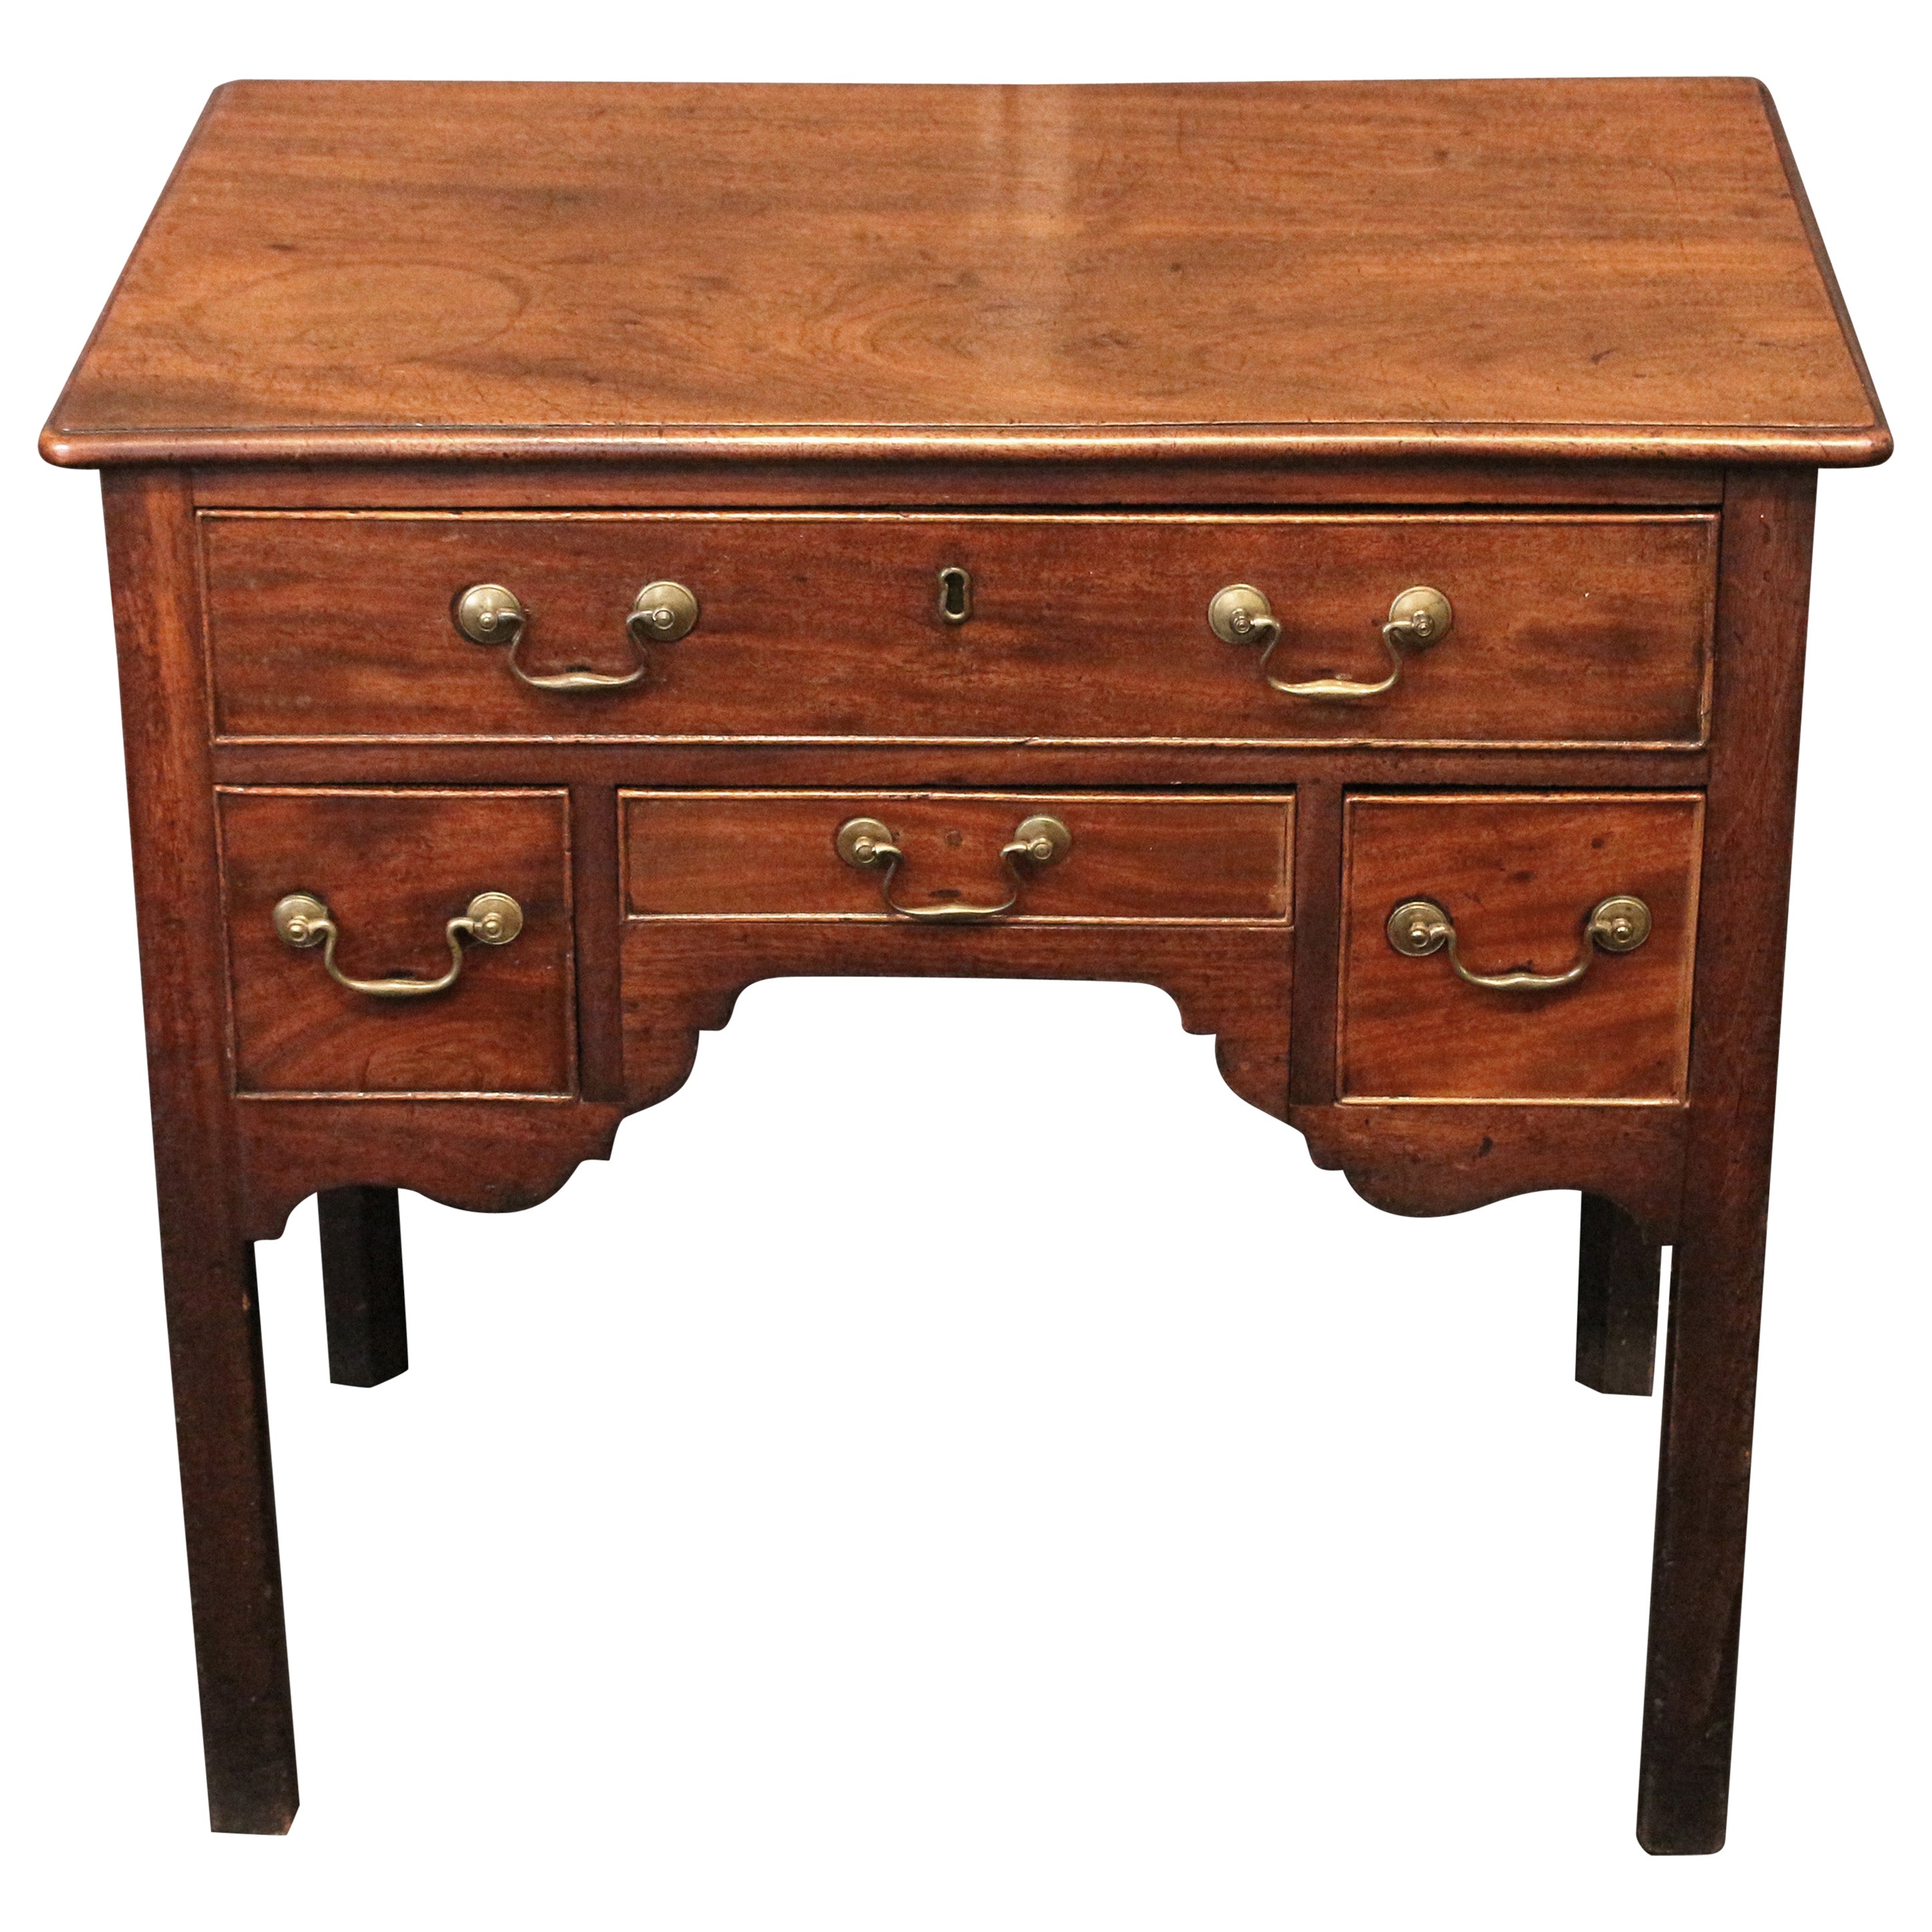 Circa 1760-80 George III Period English Lowboy Table For Sale